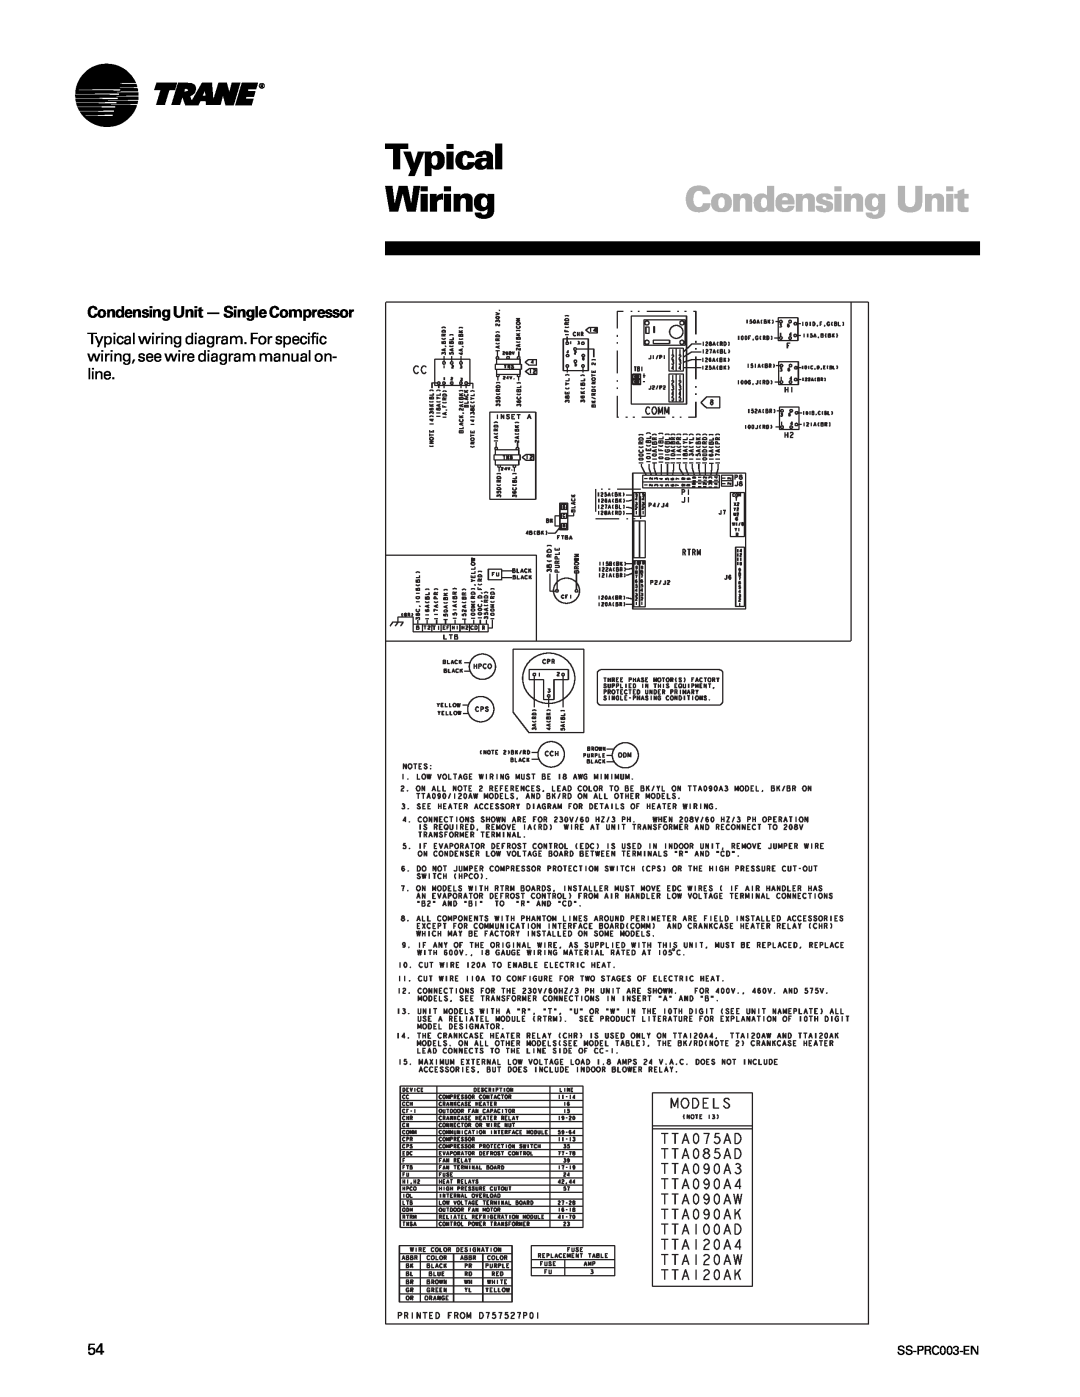 Trane SS-PRC003-EN manual Condensing Unit - Single Compressor, Typical, Wiring 